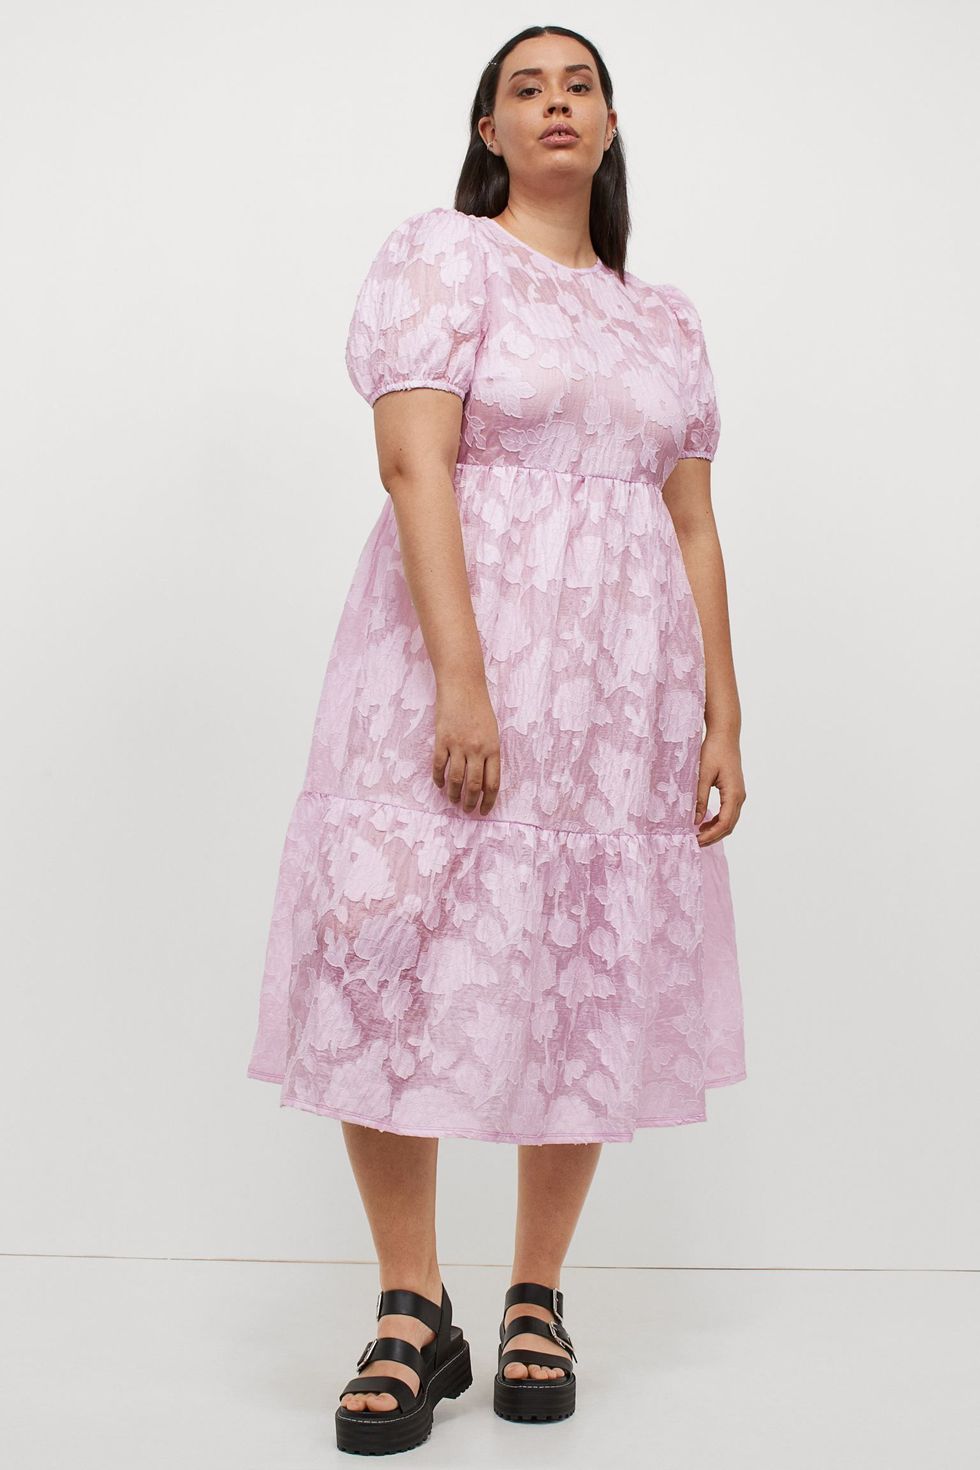 Blush Pink Self-Tie Plus Size Dress